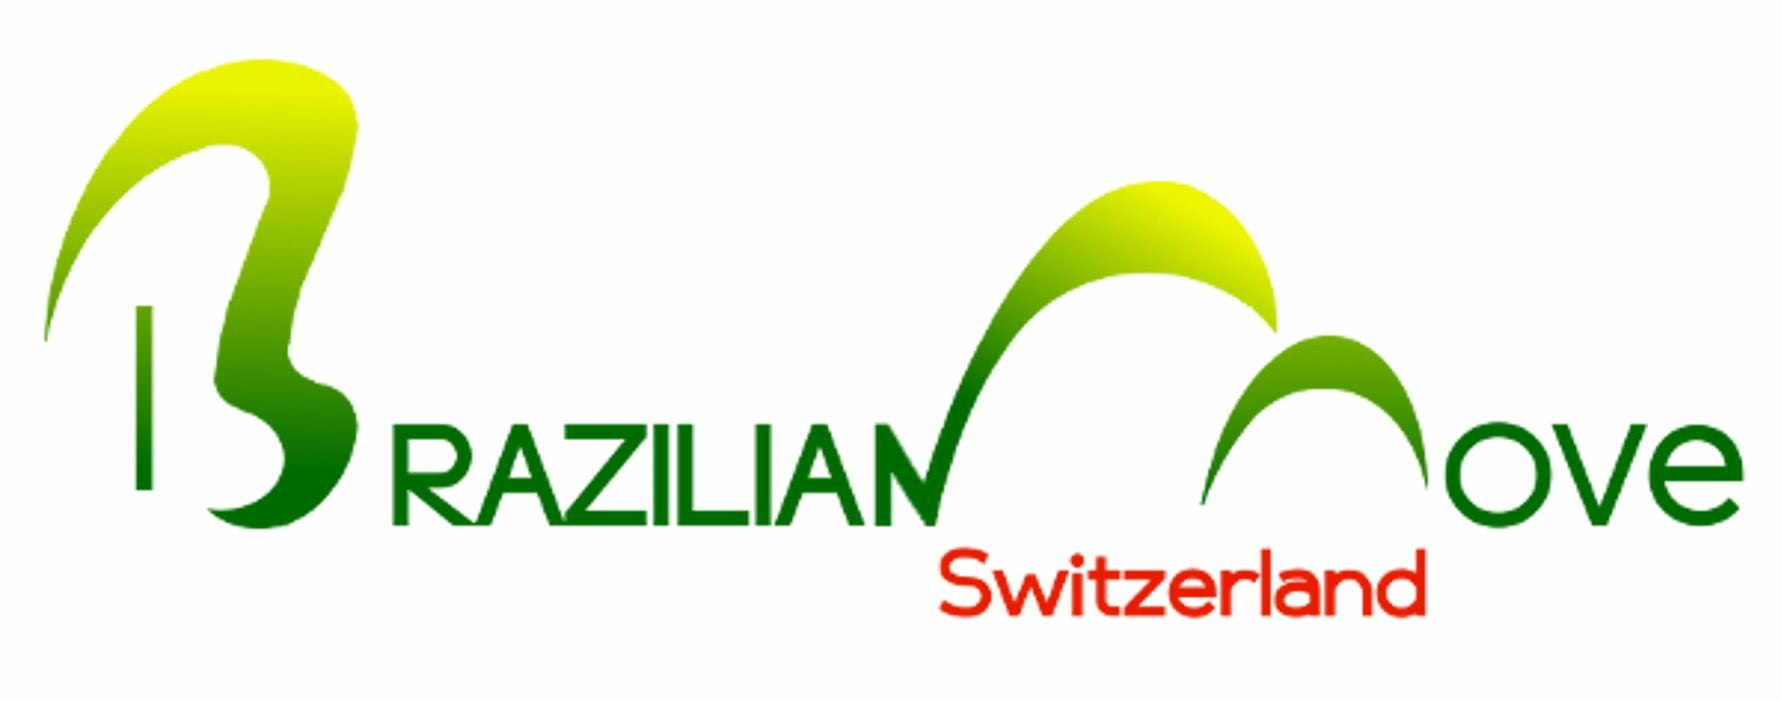 Brazilian move Switzerland